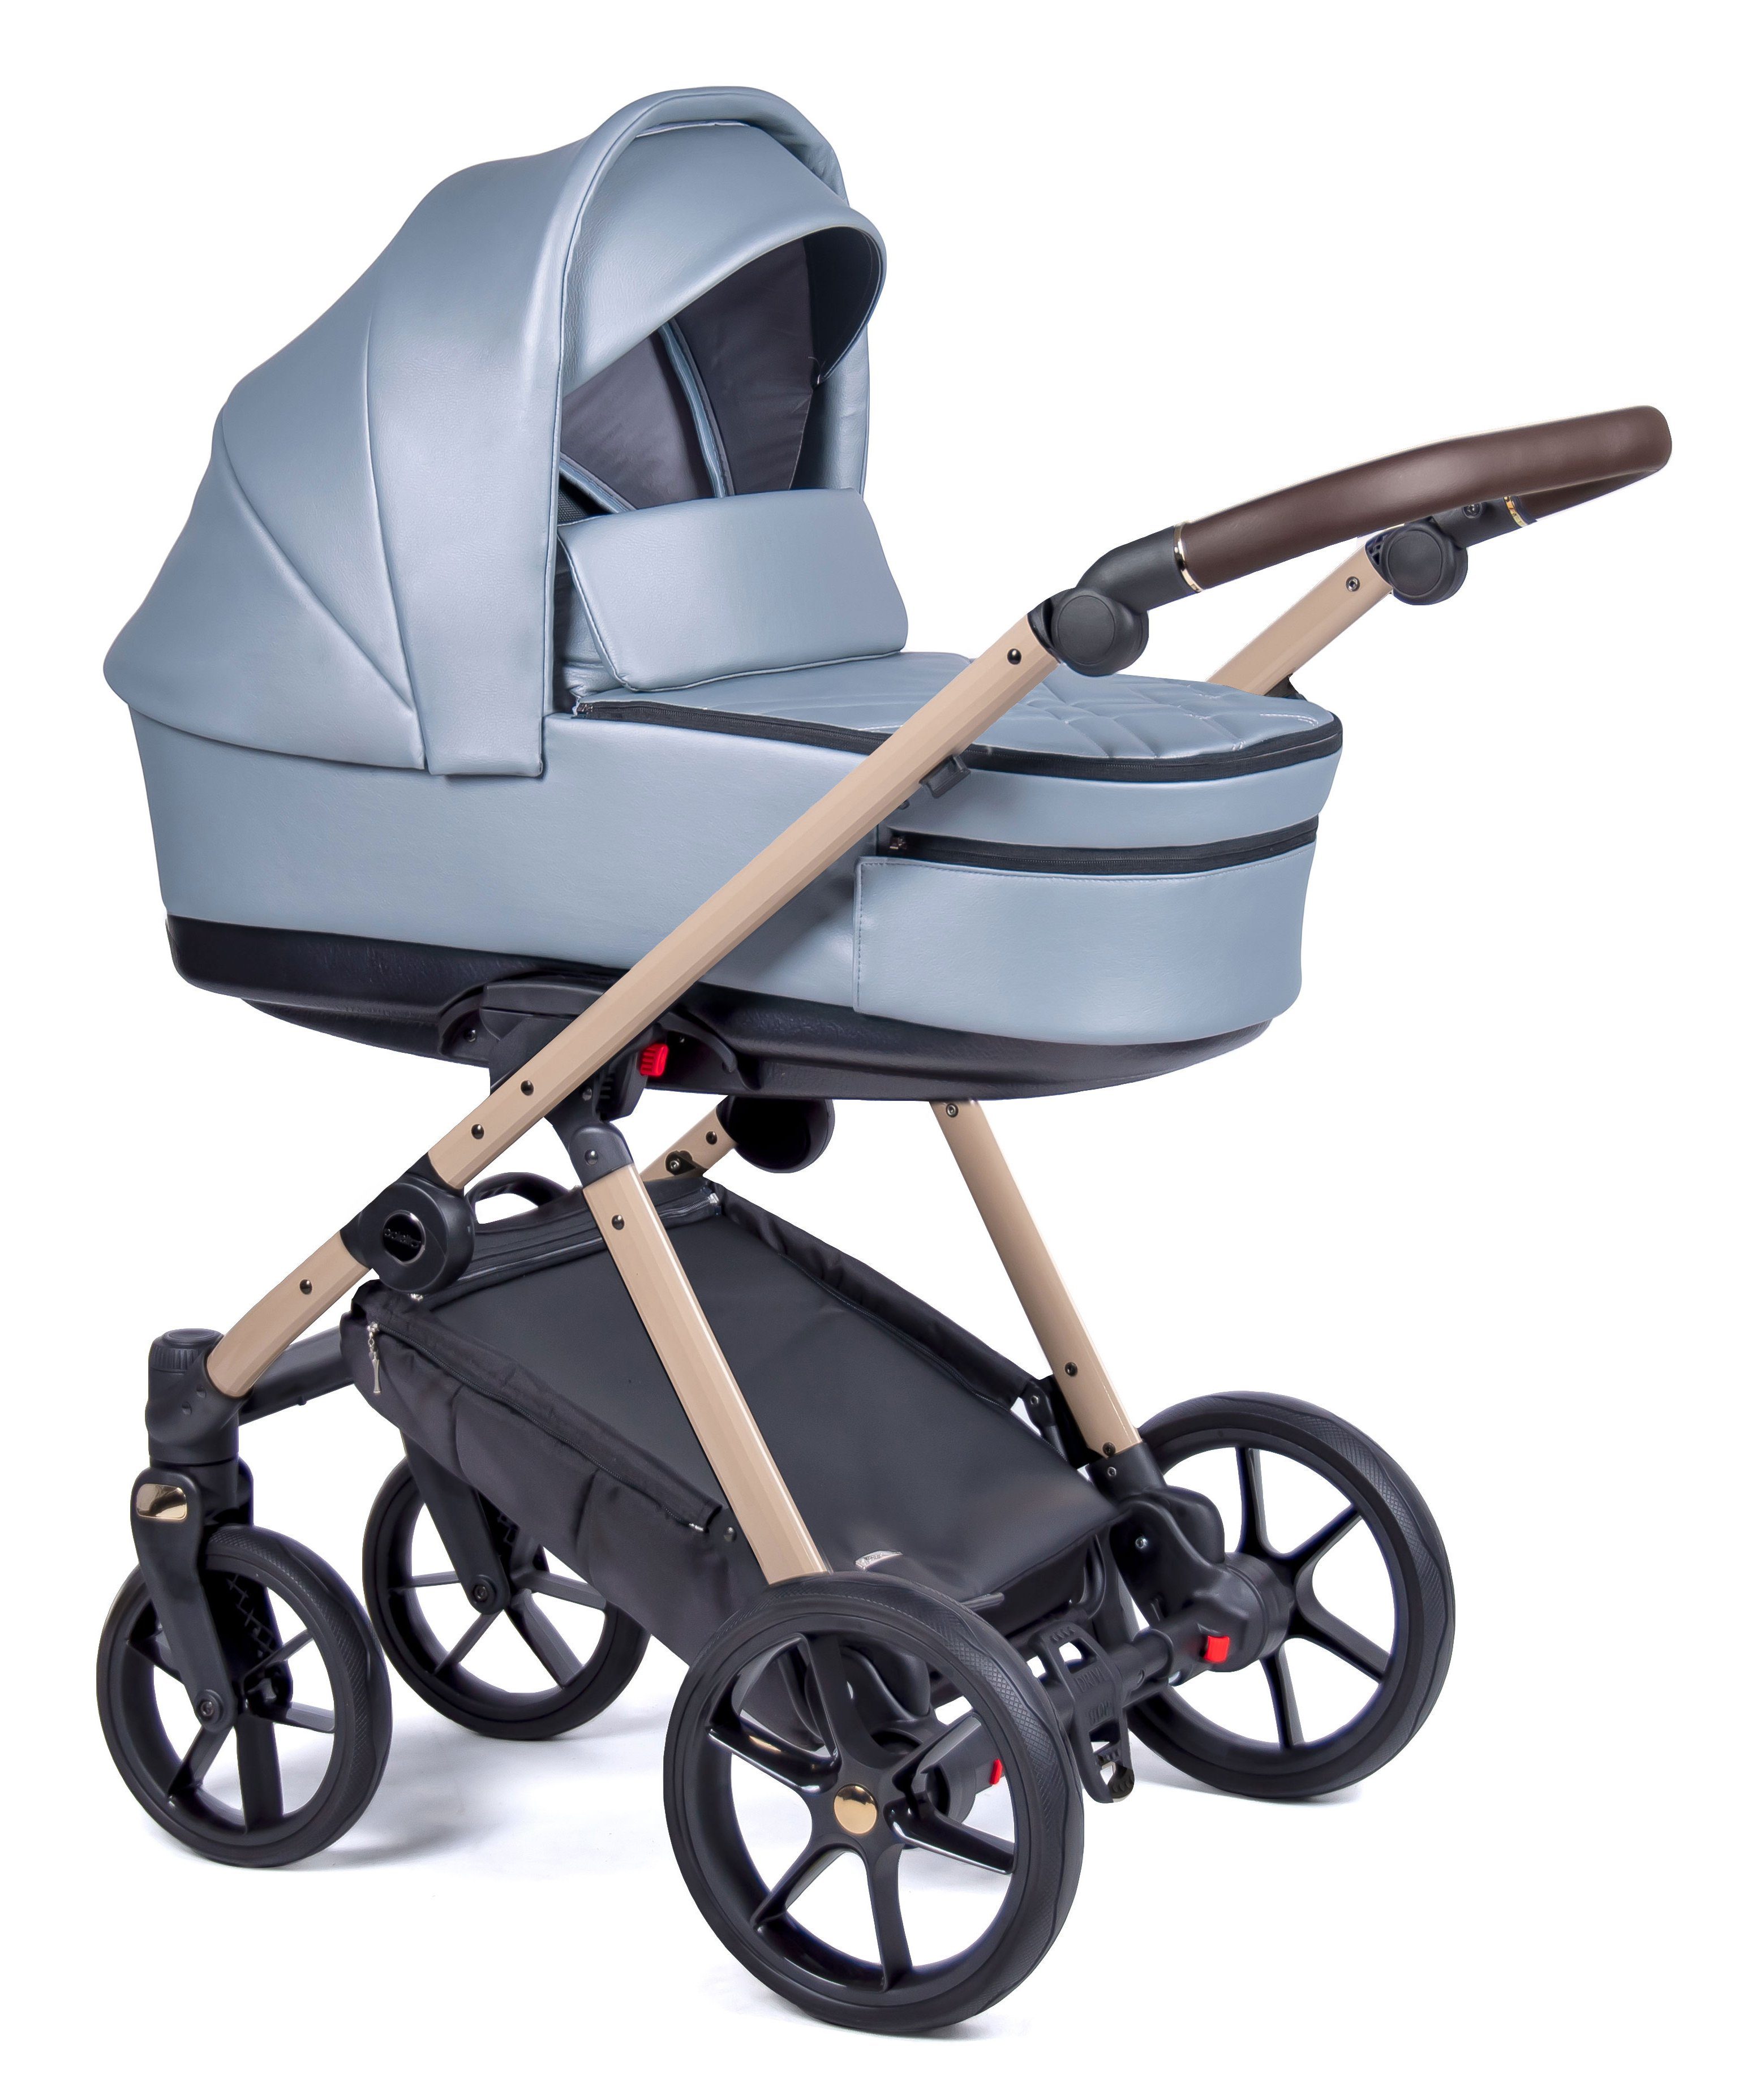 Premium Kinderwagen-Set beige 14 1 Designs 2 Gestell in 12 - babies-on-wheels in = Teile Axxis - Oceanblau Kombi-Kinderwagen